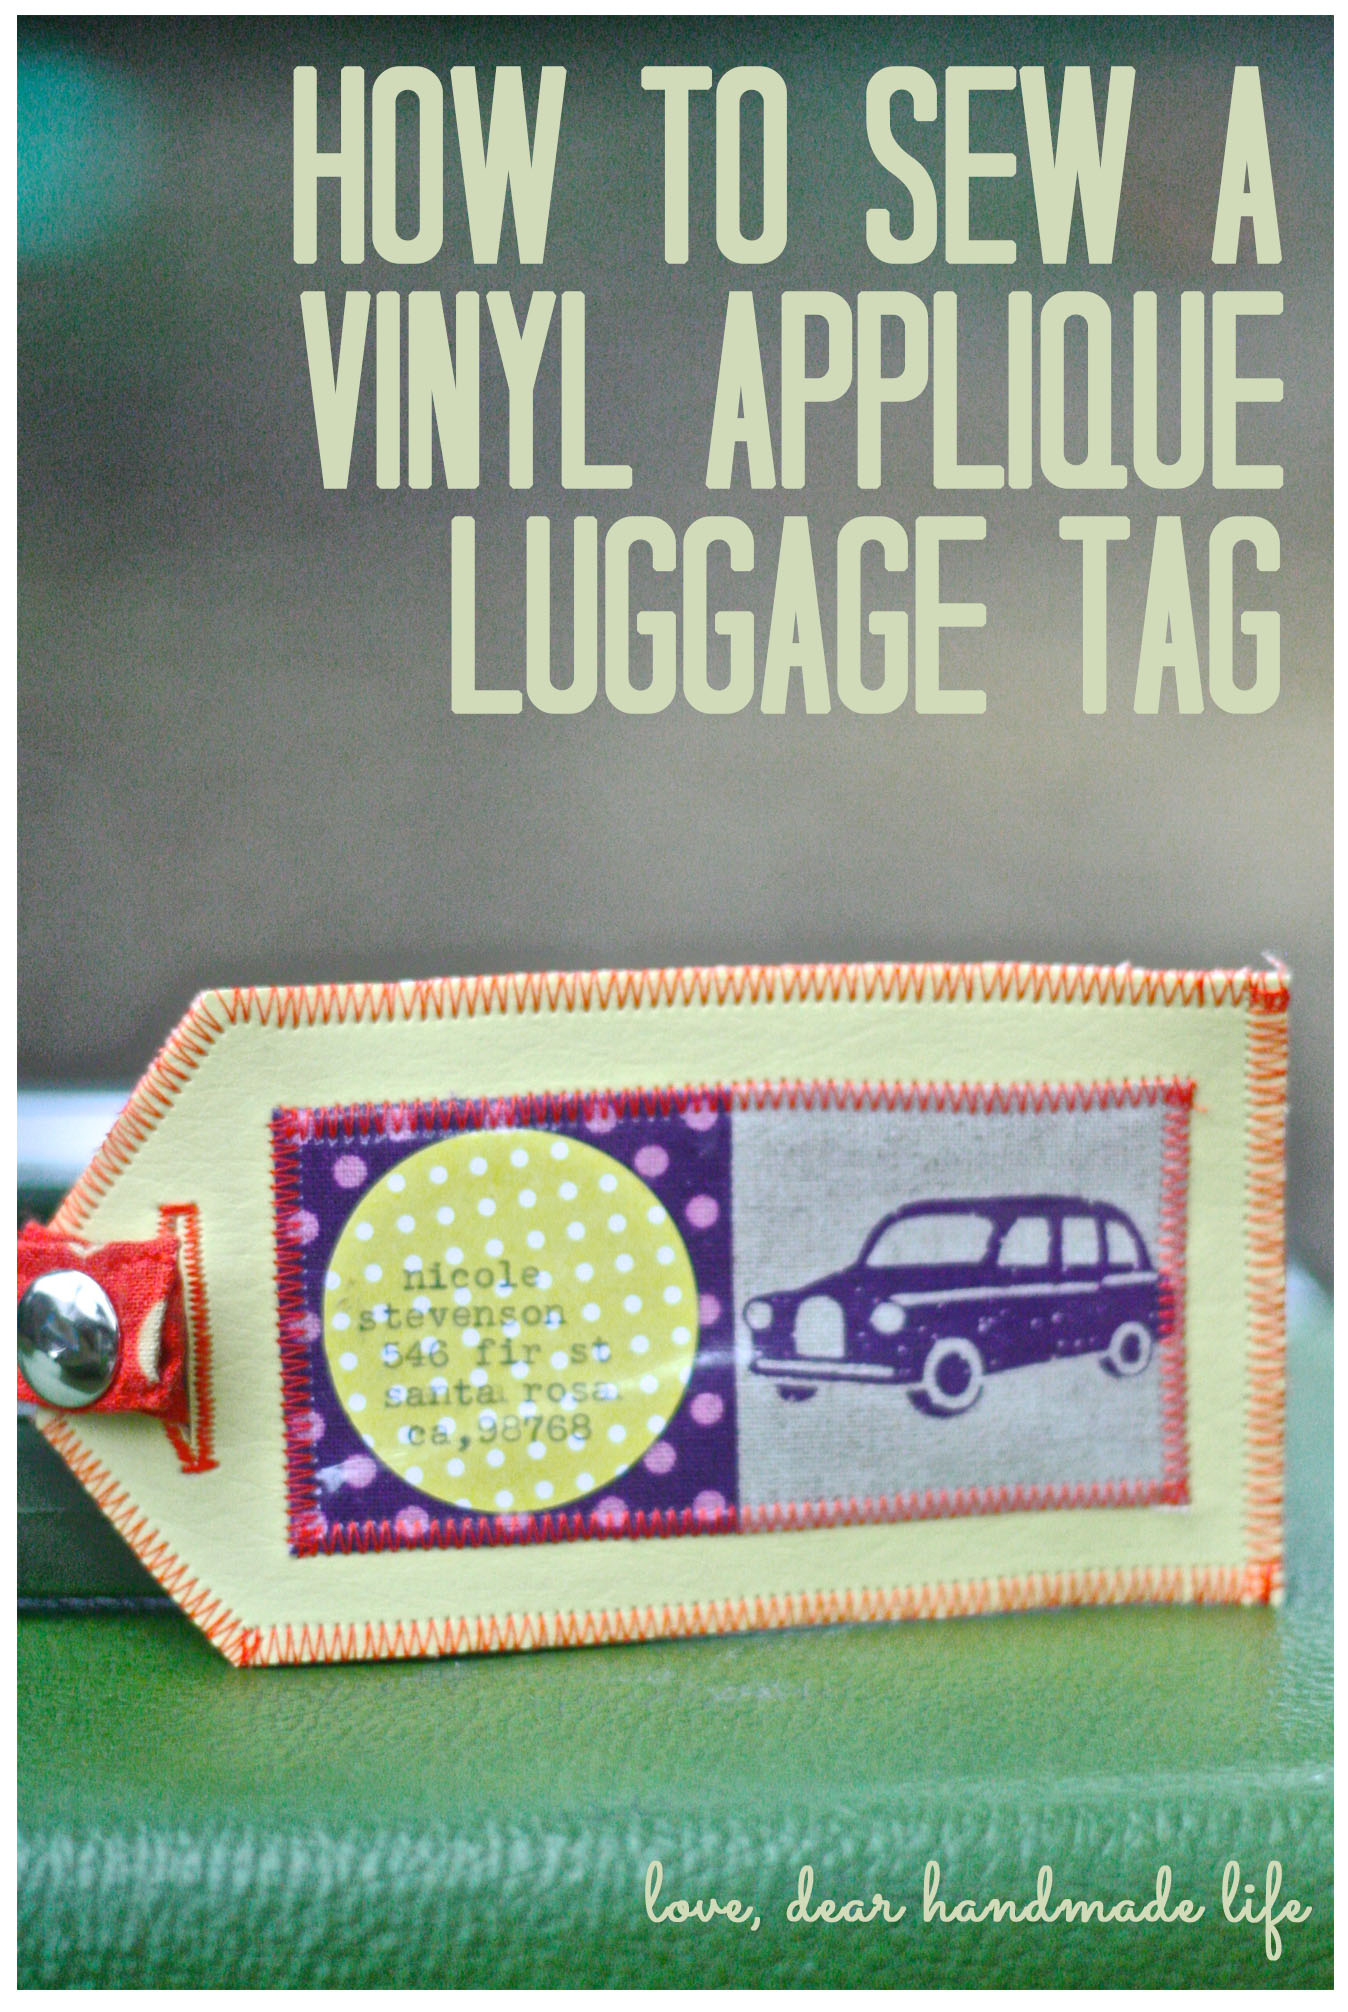 craft-luggage-tag-dear-handmade-life-how-to-sew-craft-diy